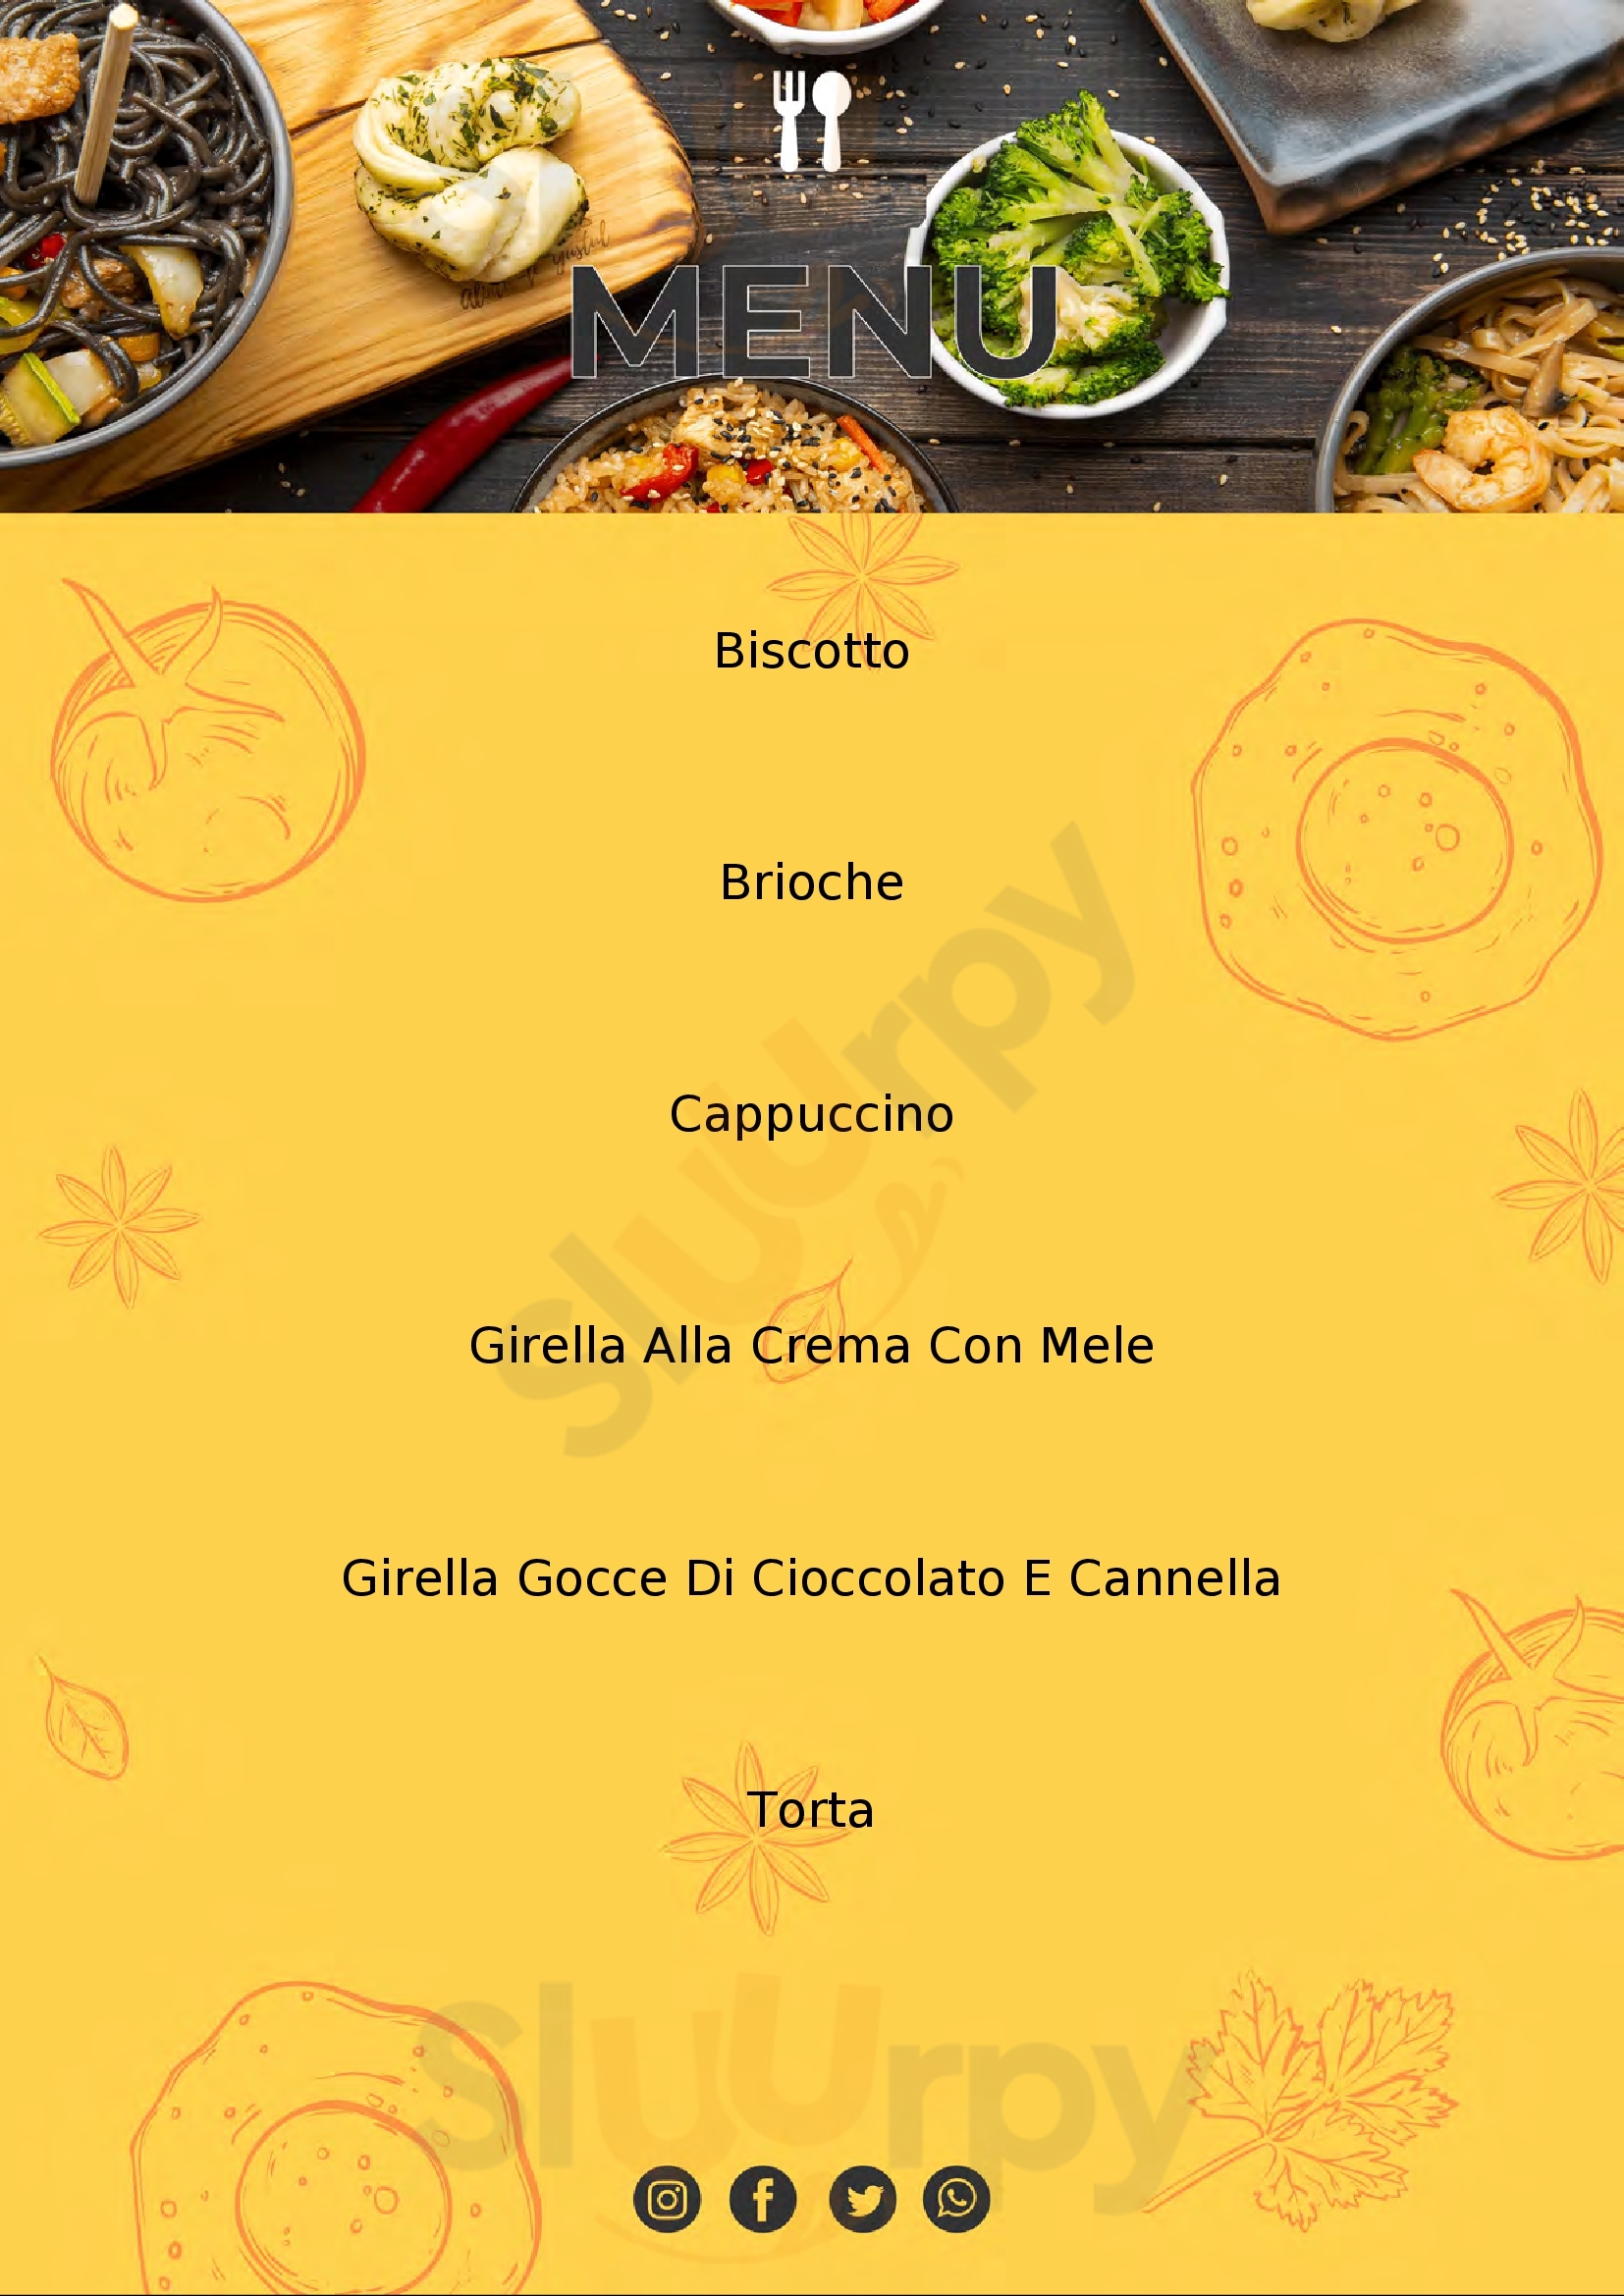 Pasticceria & Caffetteria Biancaneve Cremona menù 1 pagina